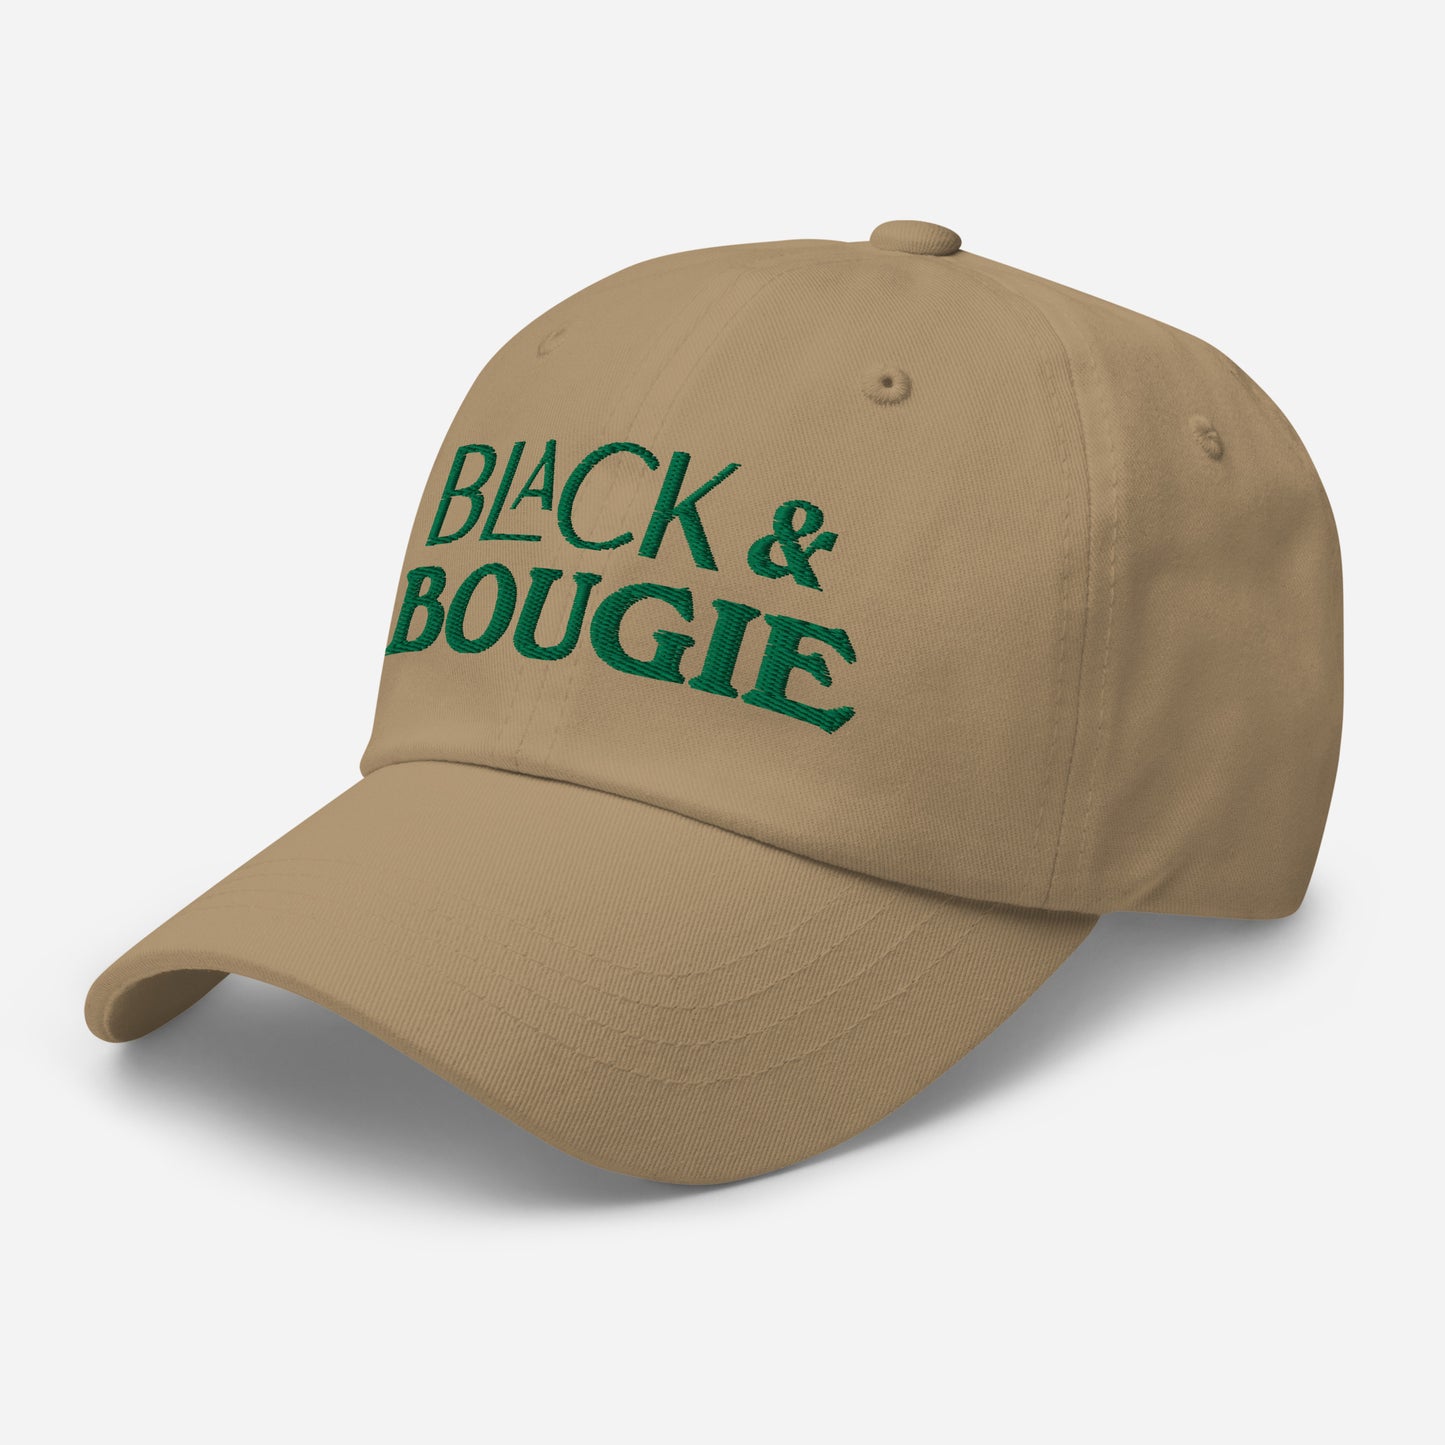 Black & Bougie -Summer Green hat